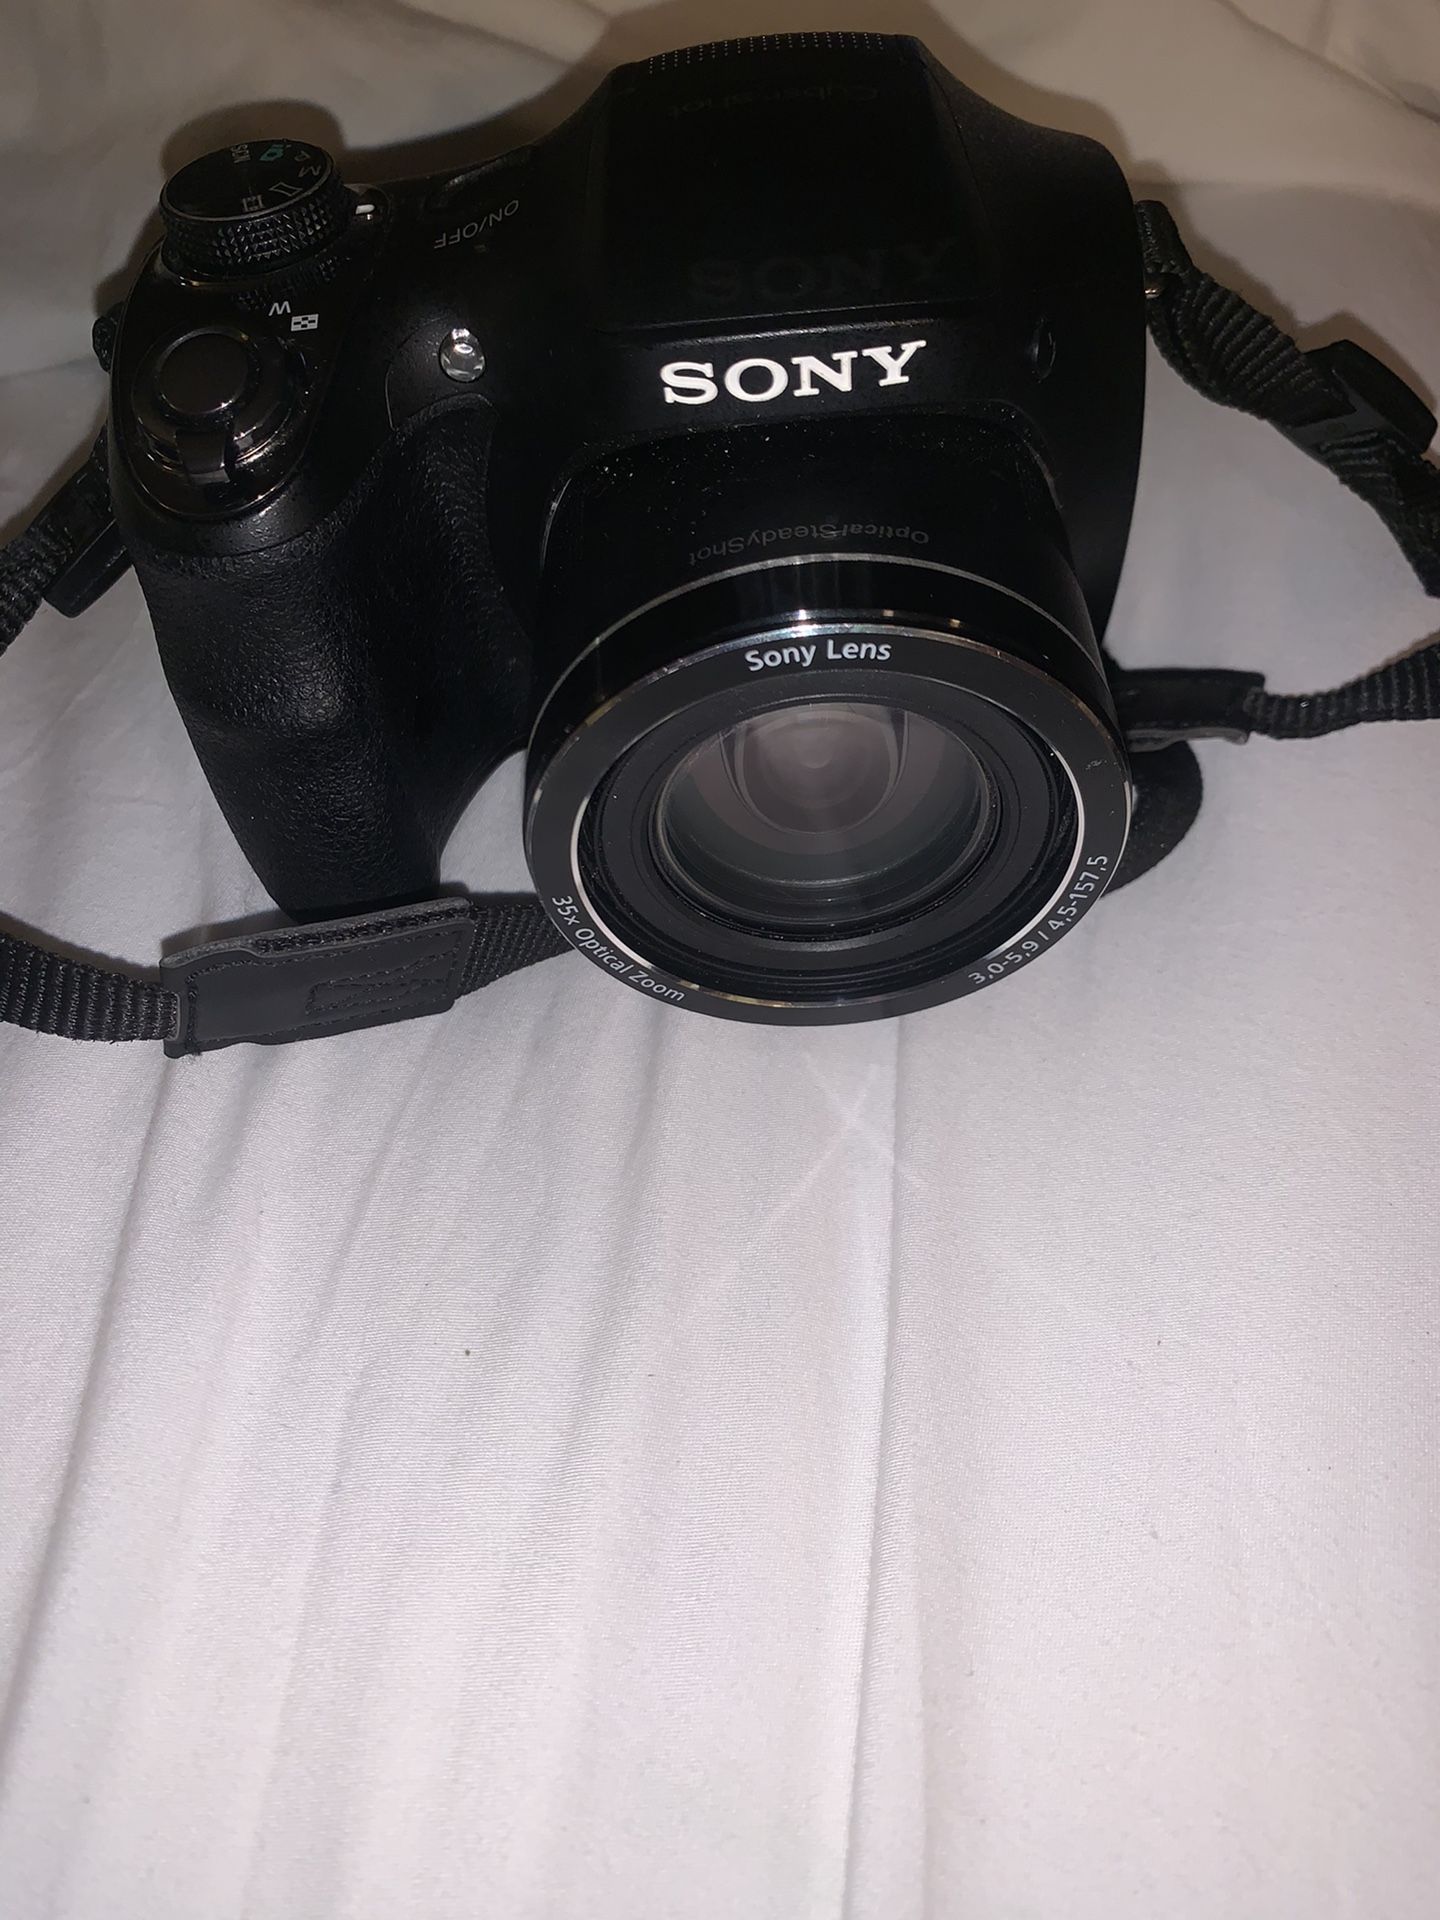 Sony Digital video camera/camcorder